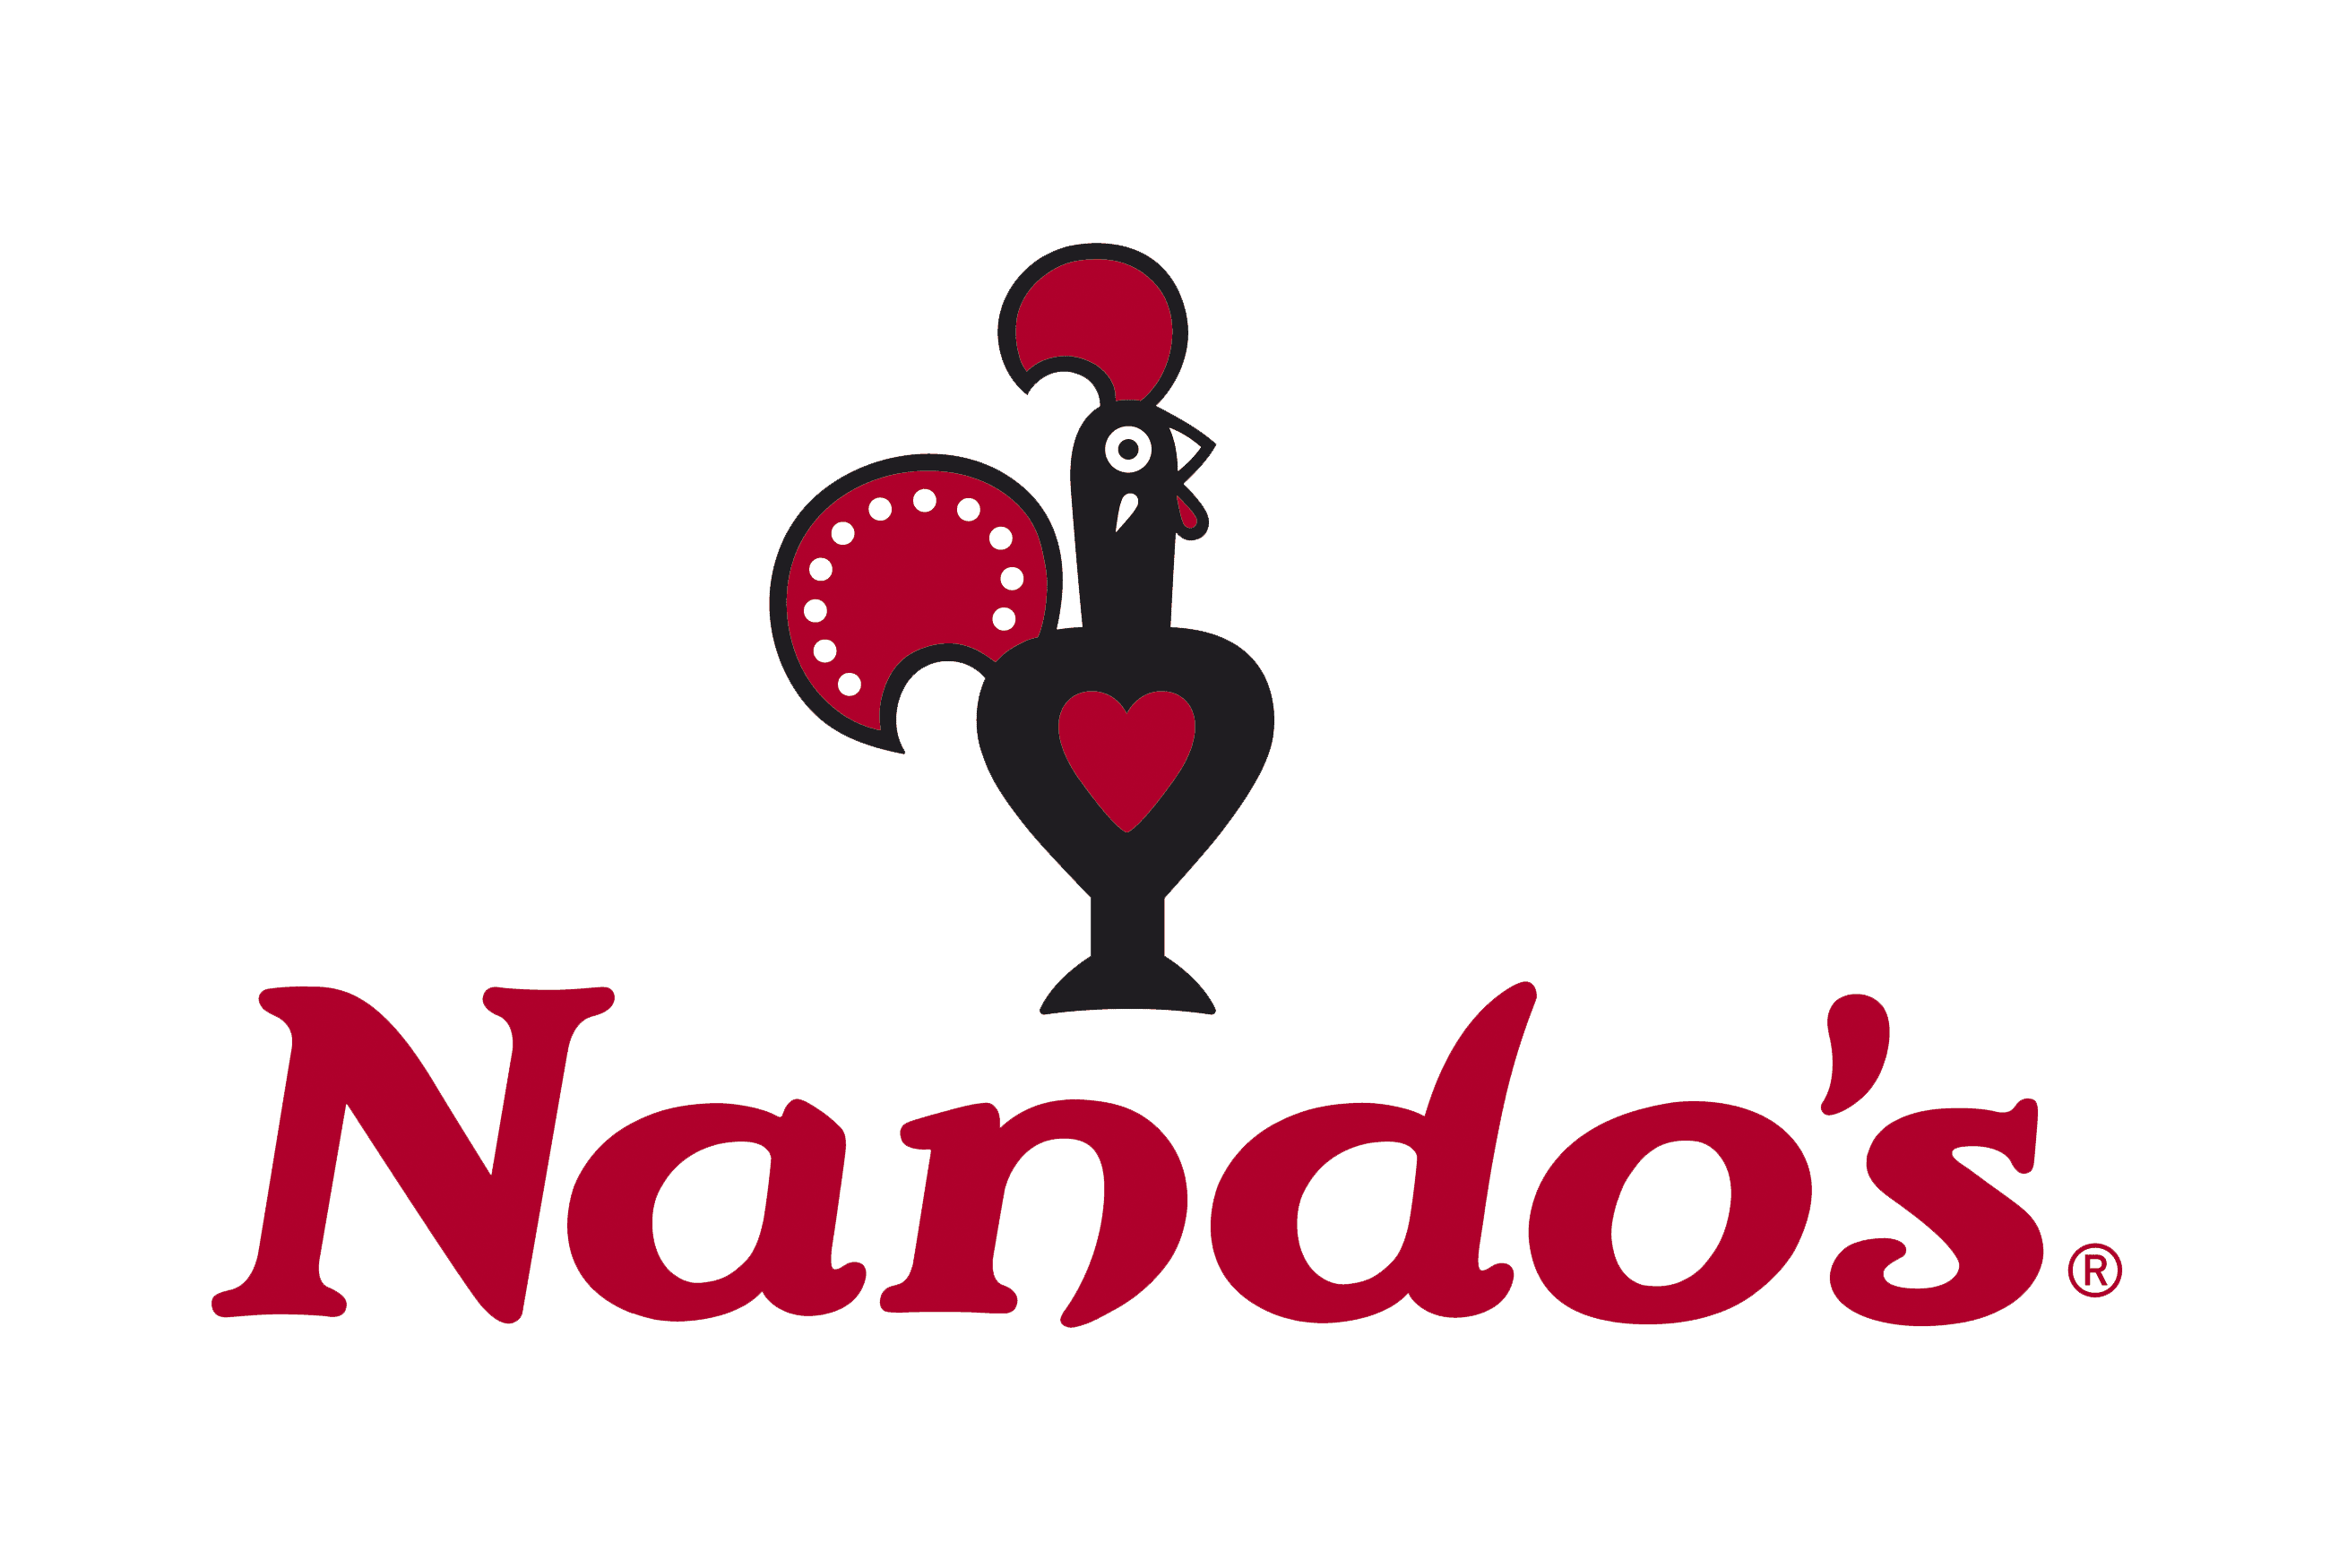 Nandos_logo_PNG1